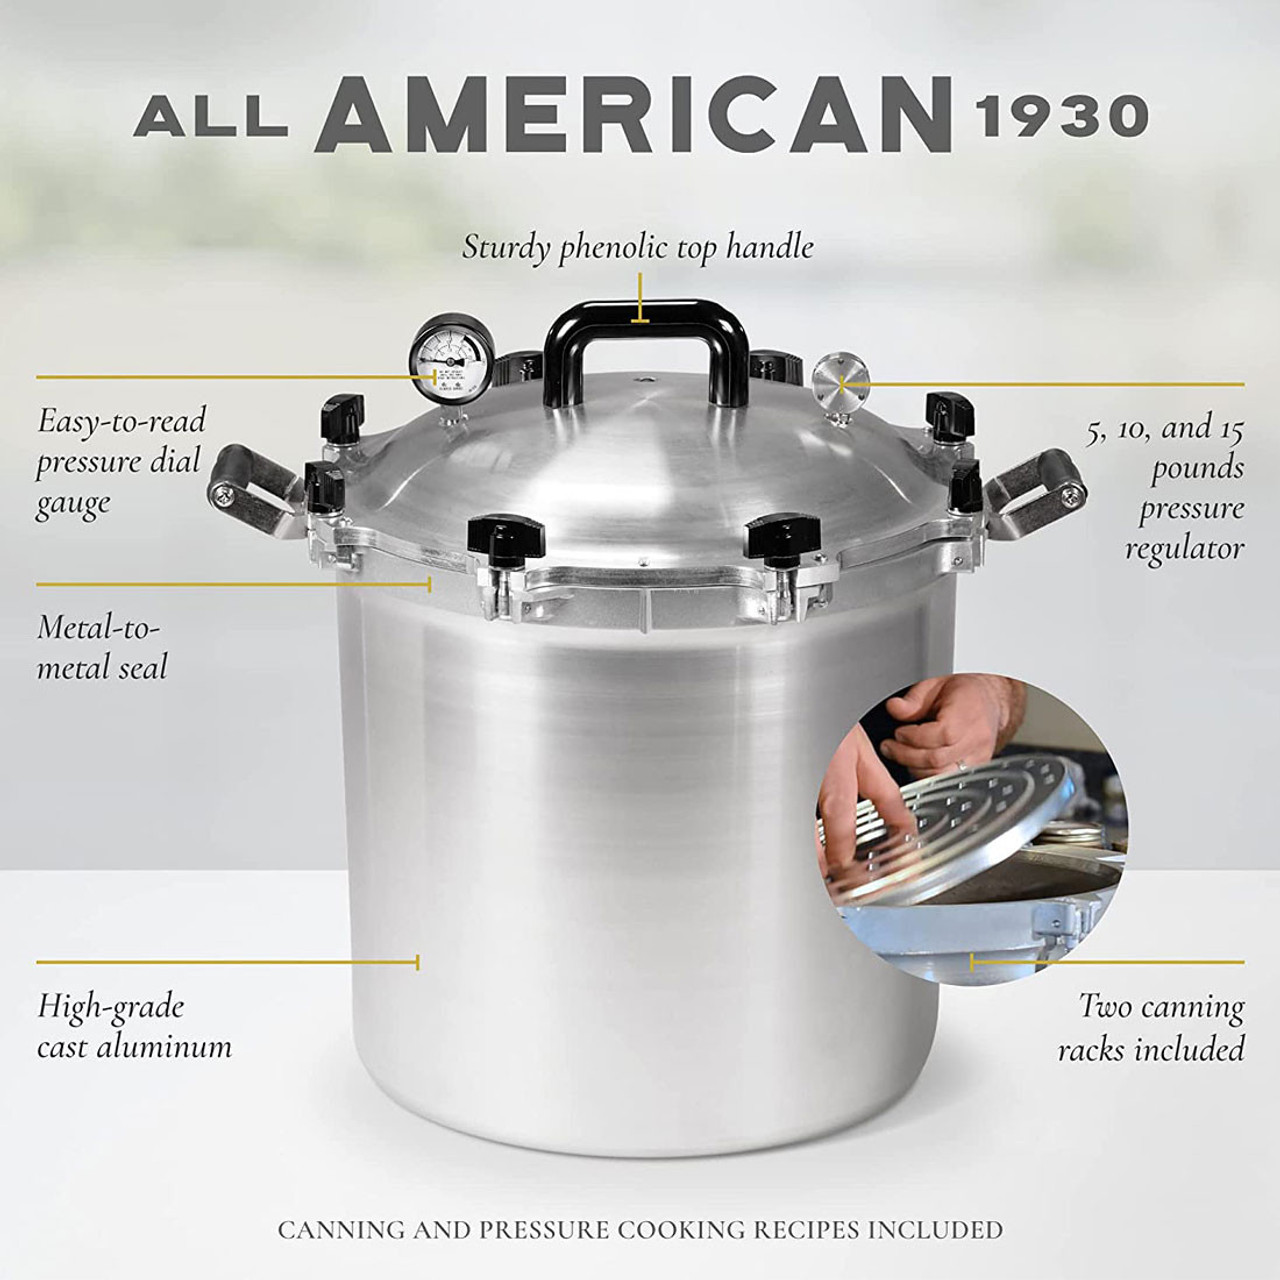 All American Pressure Cooker 910